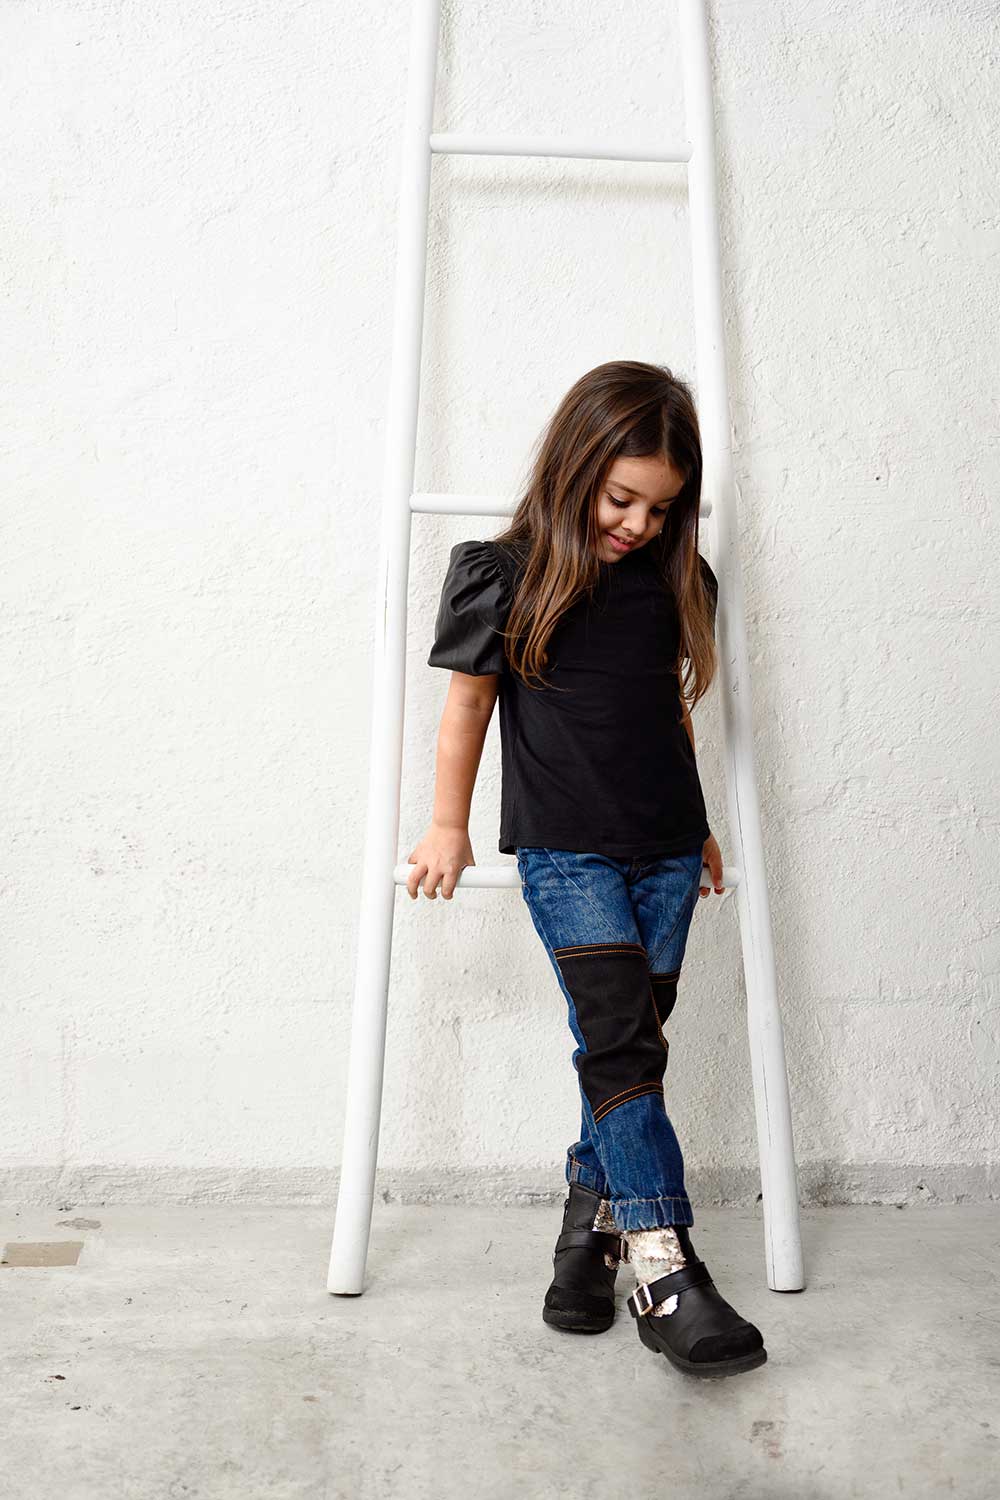 Nimble Patch - Fully Circular Jeans | Kids\' CWB Magazine